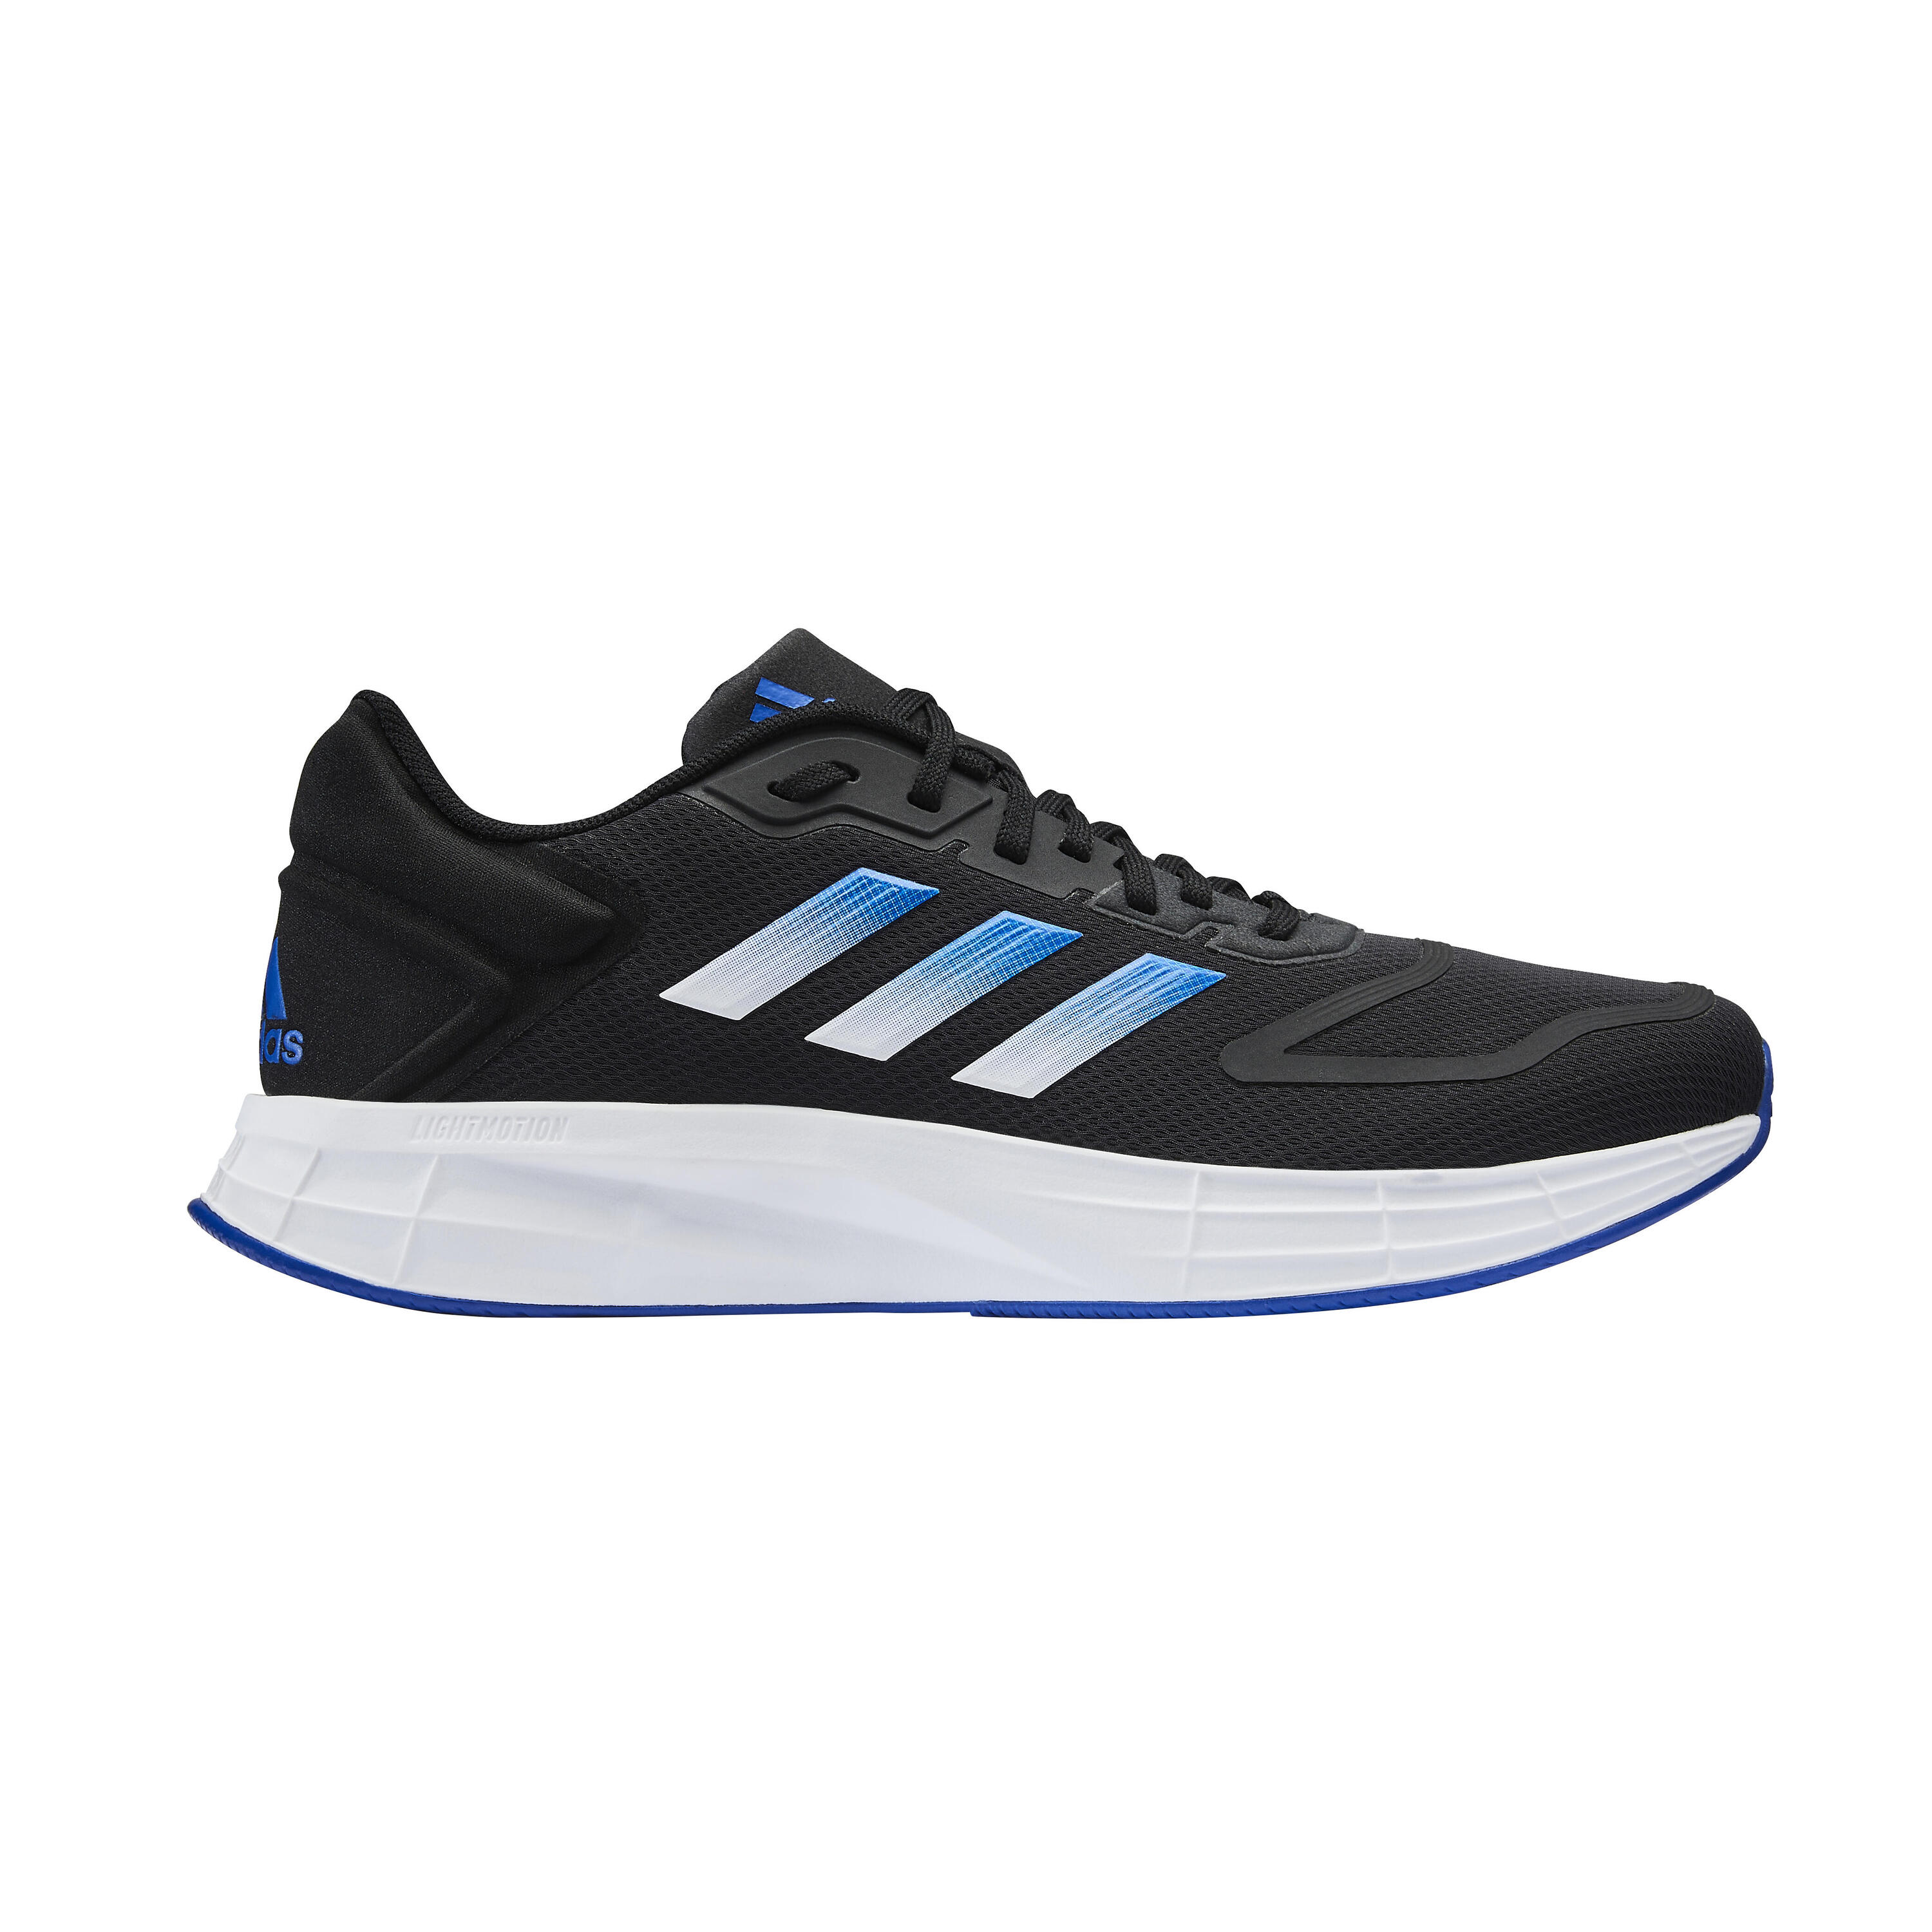 Adidas Duramo Men's Running Shoes - Black 2/7